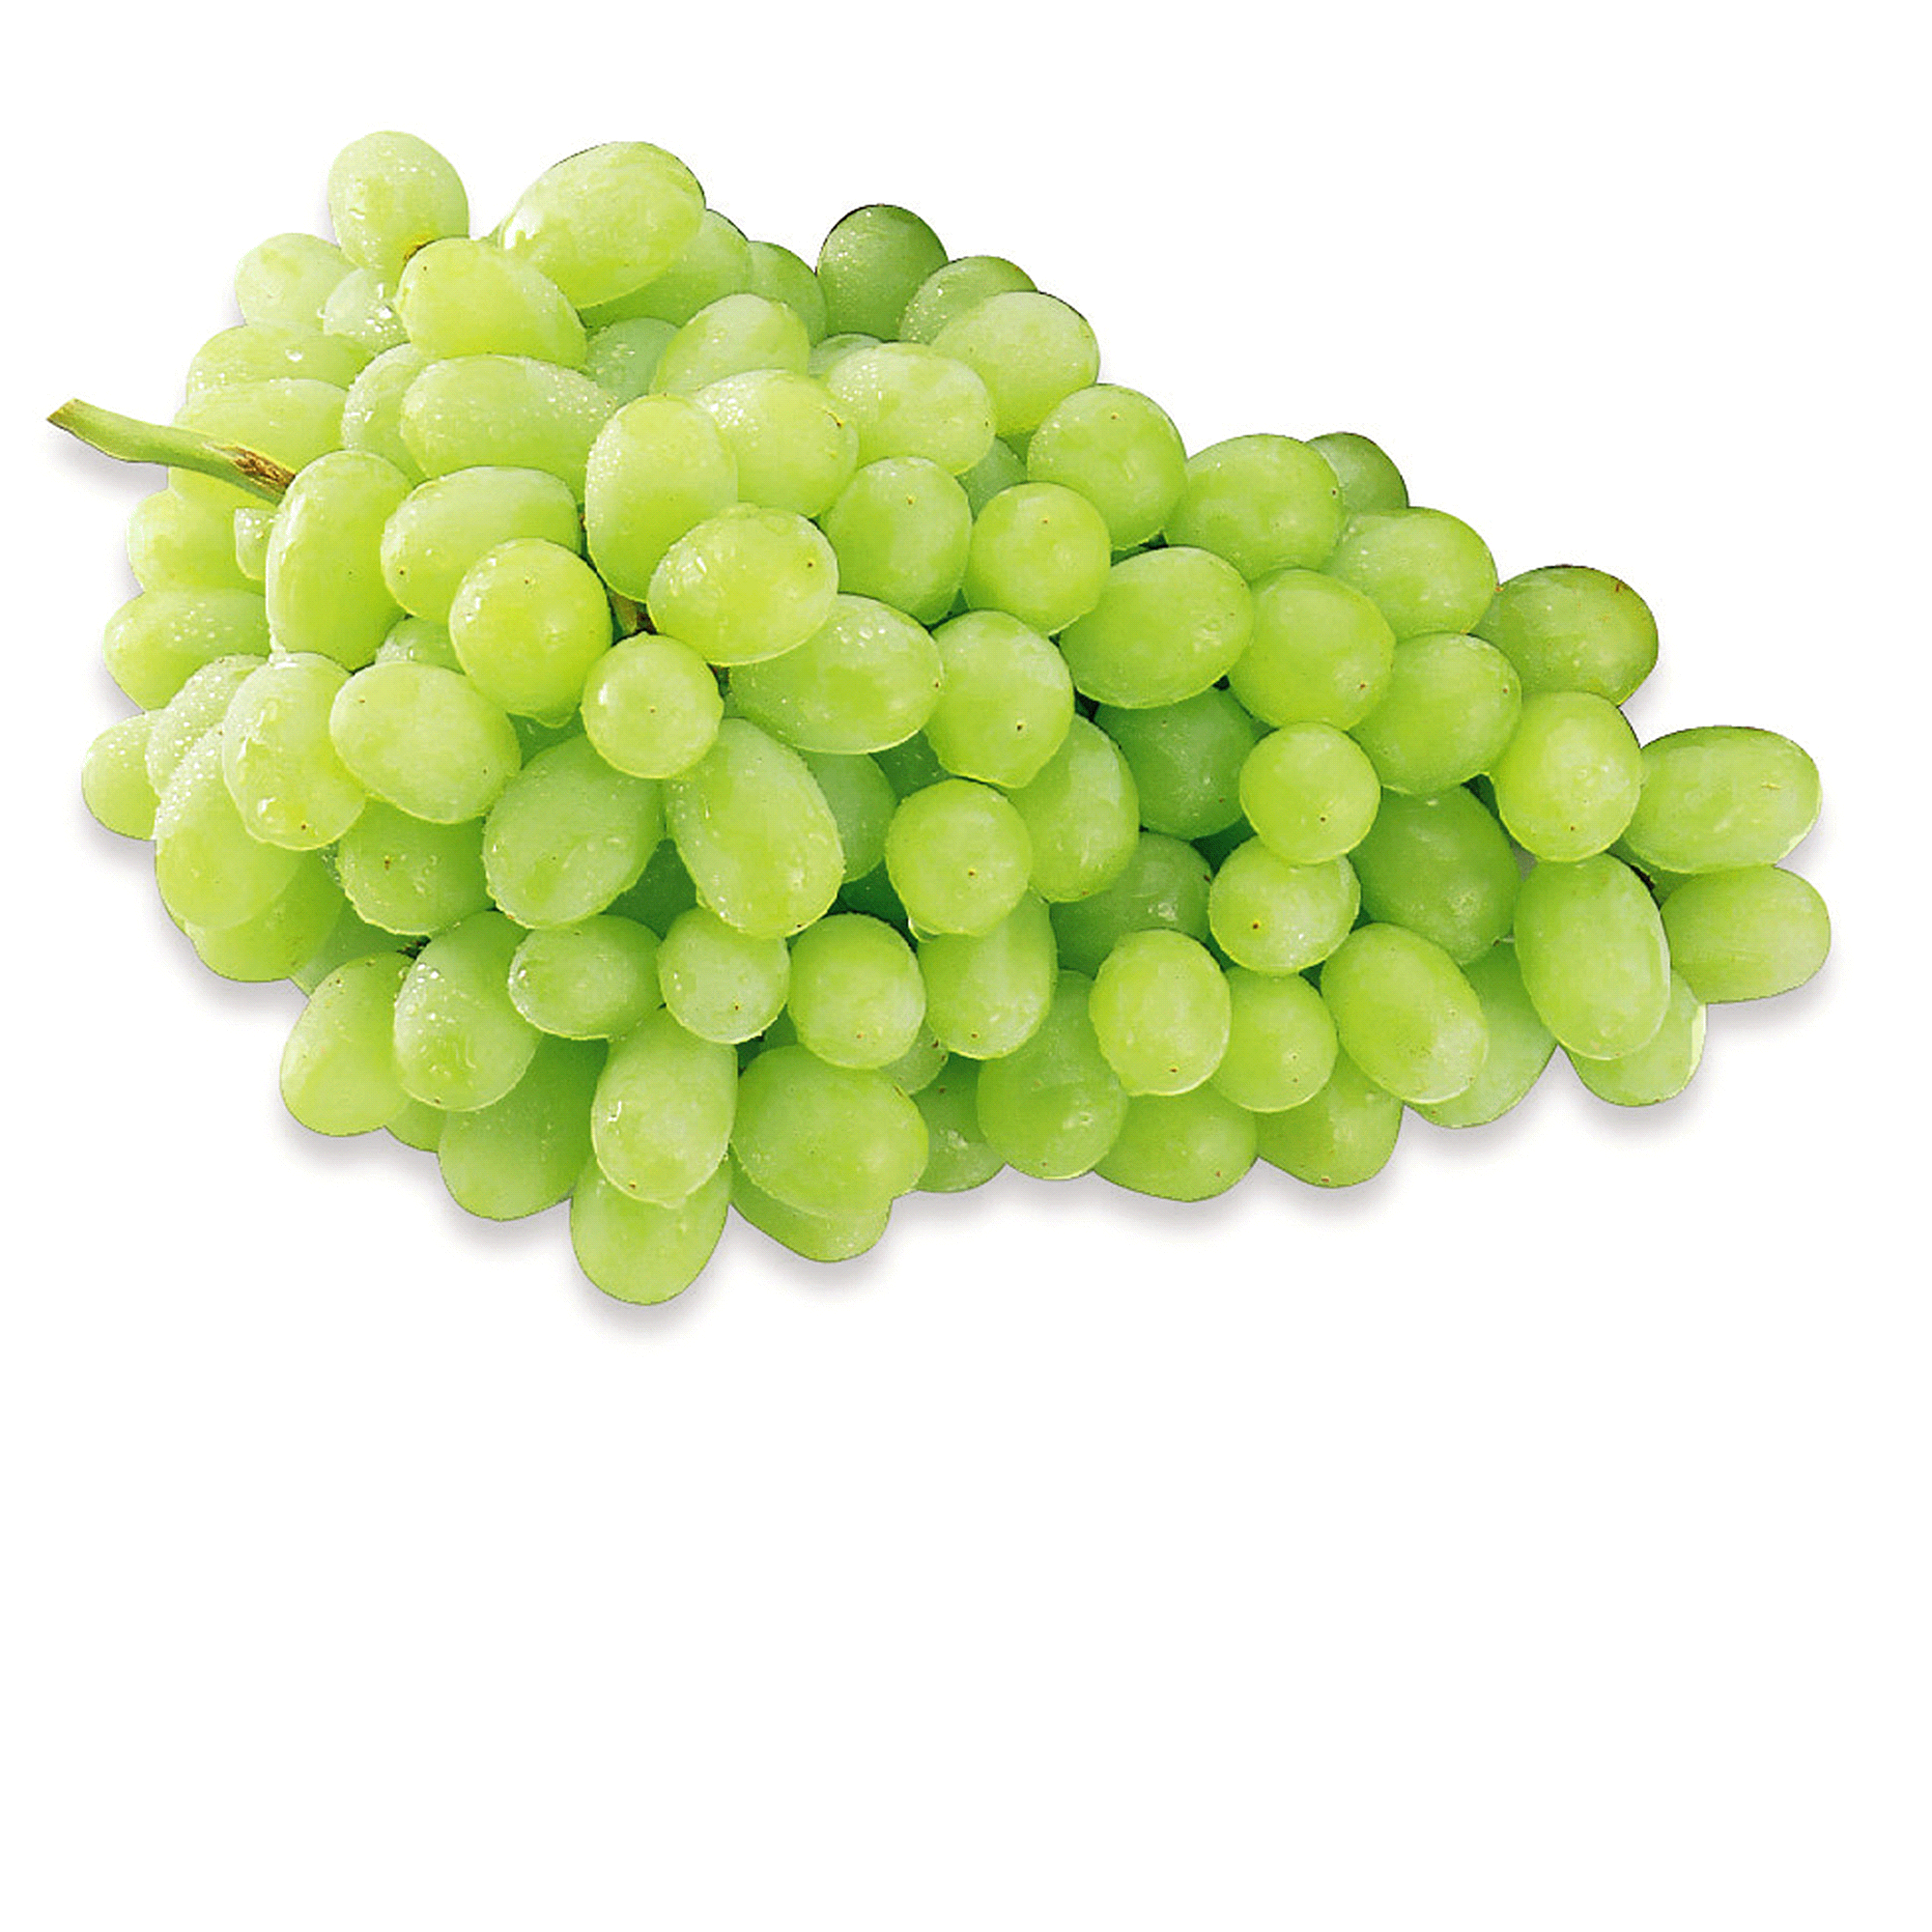 Green Seedless Grapes | Meijer.com